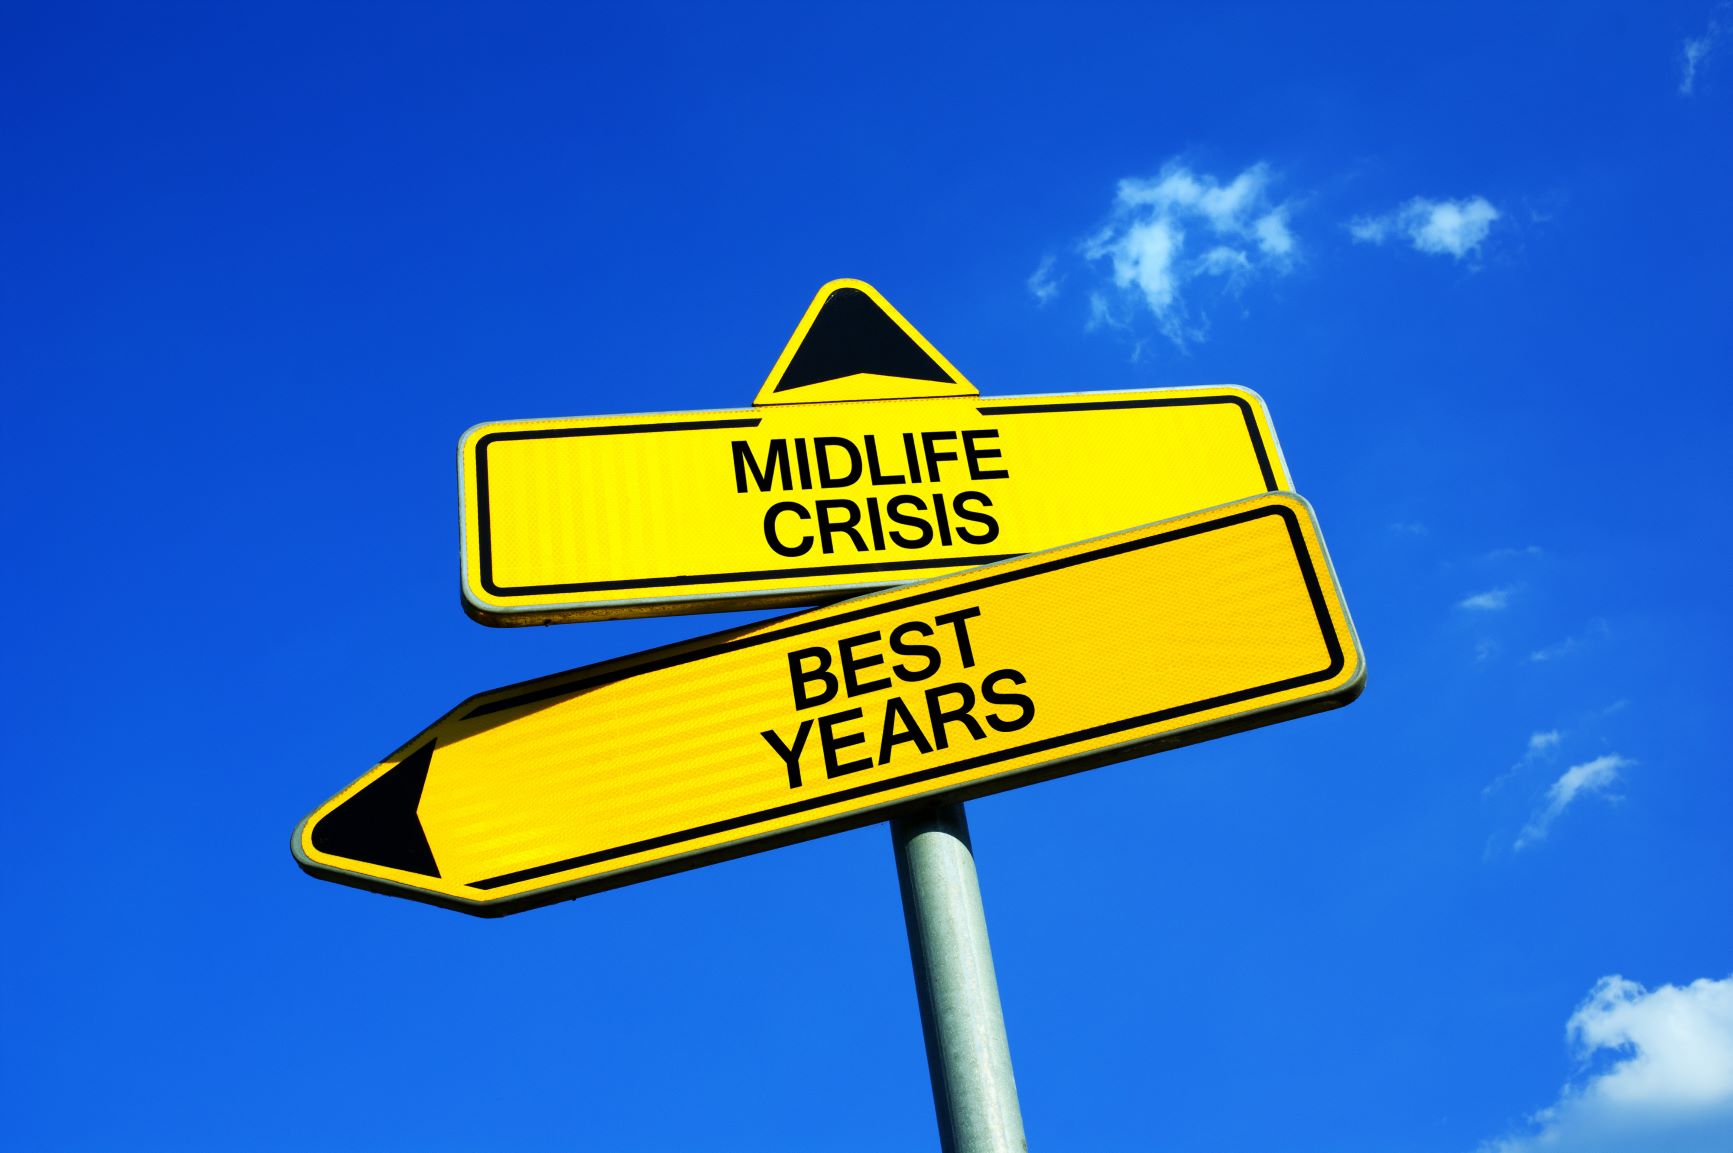 Midlife crisis symptoms